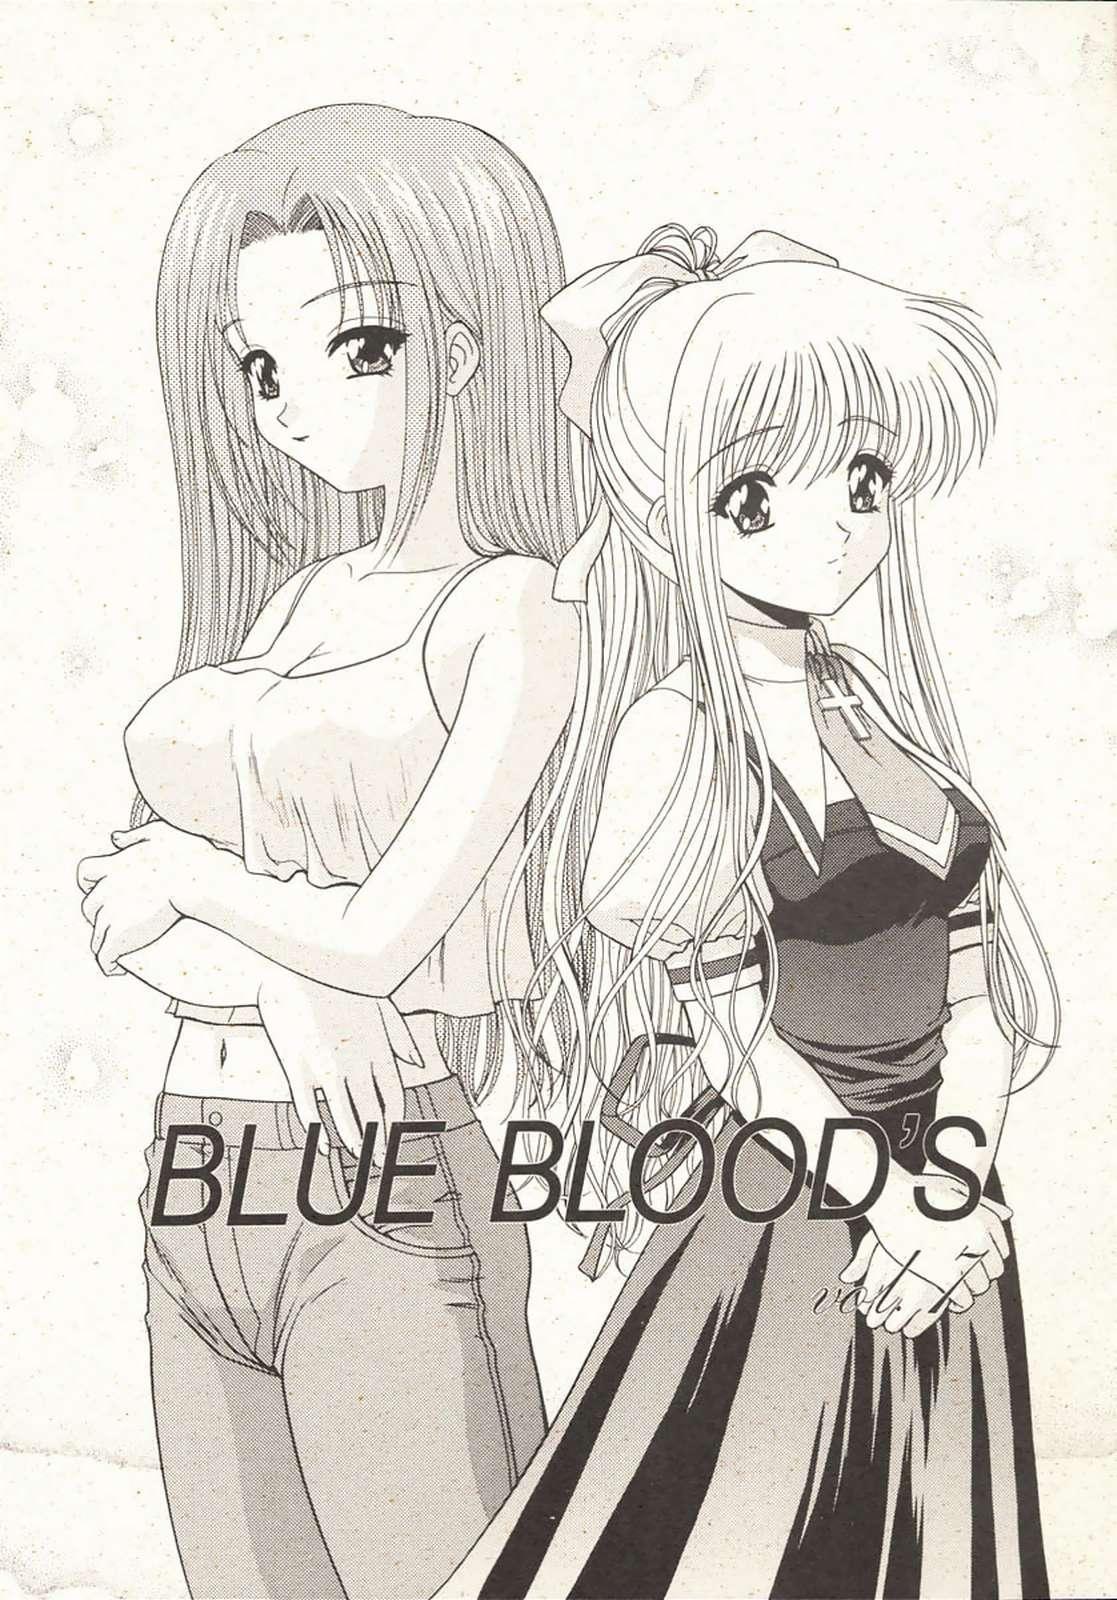 Blue Blood's vol. 7 0